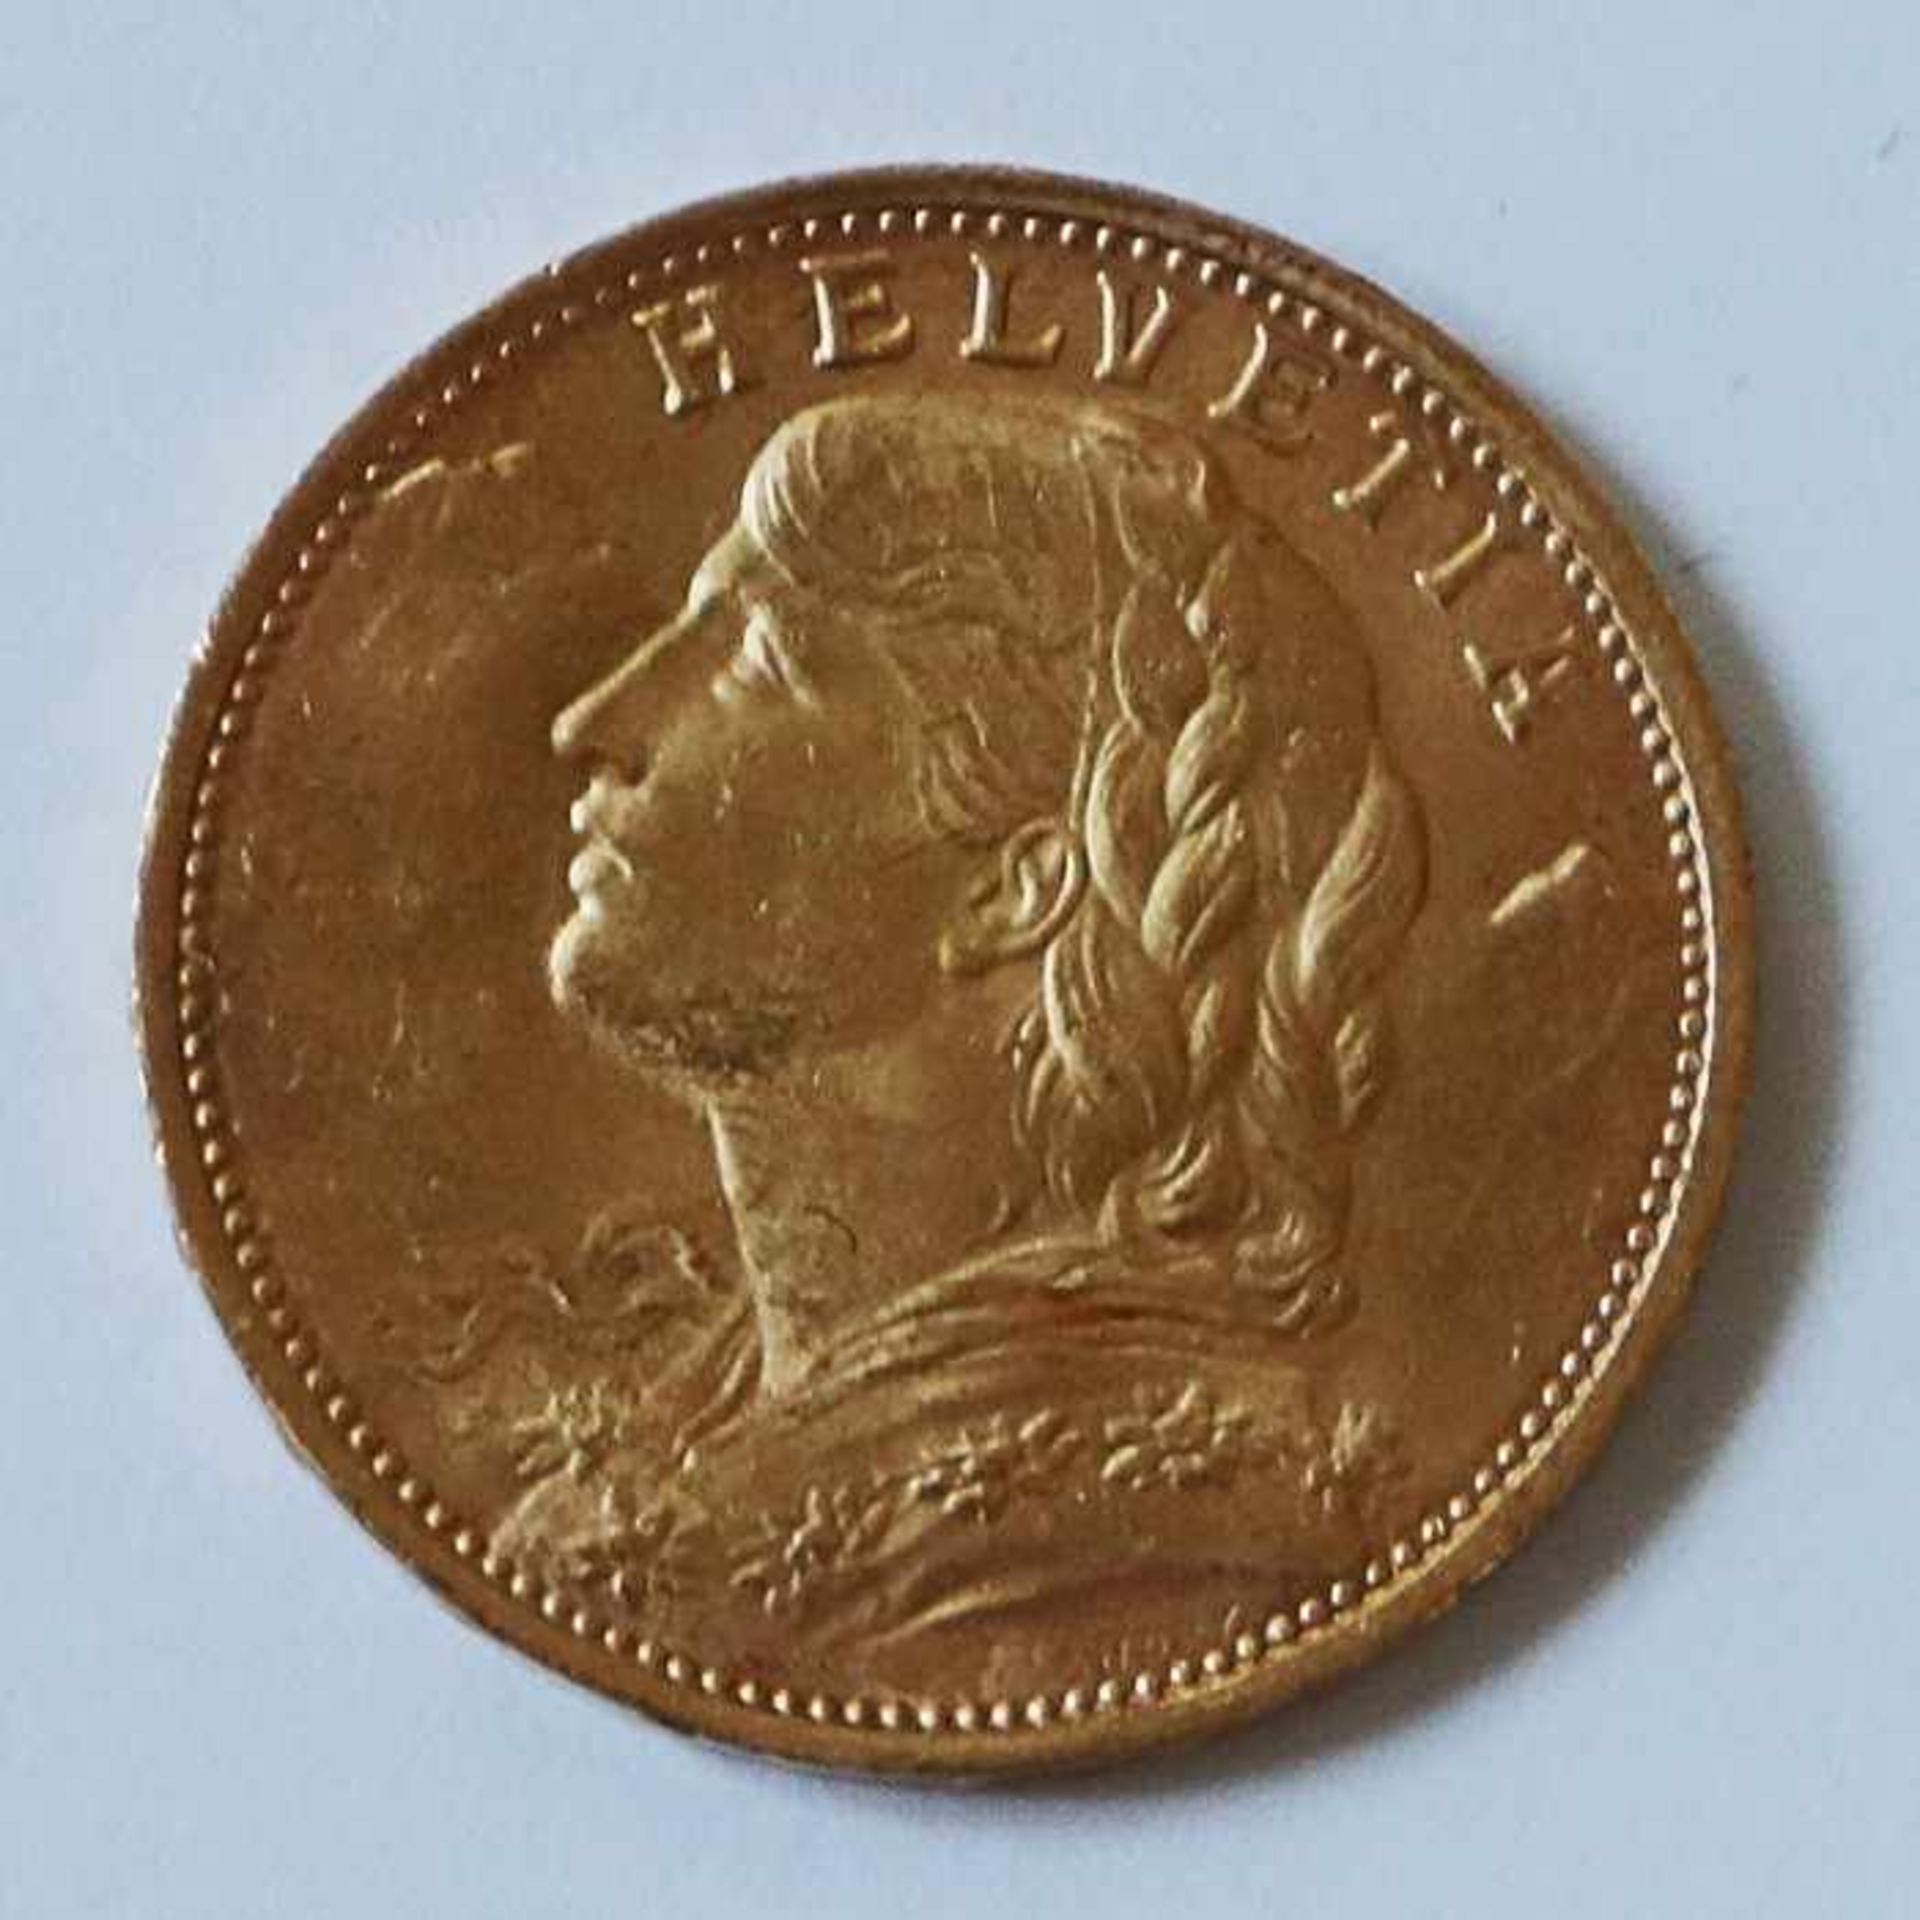 Gold - Schweiz 20 Franken 1935Schweizer Vreneli, LB, D 21mm, G 6,45g, vz - Image 2 of 4